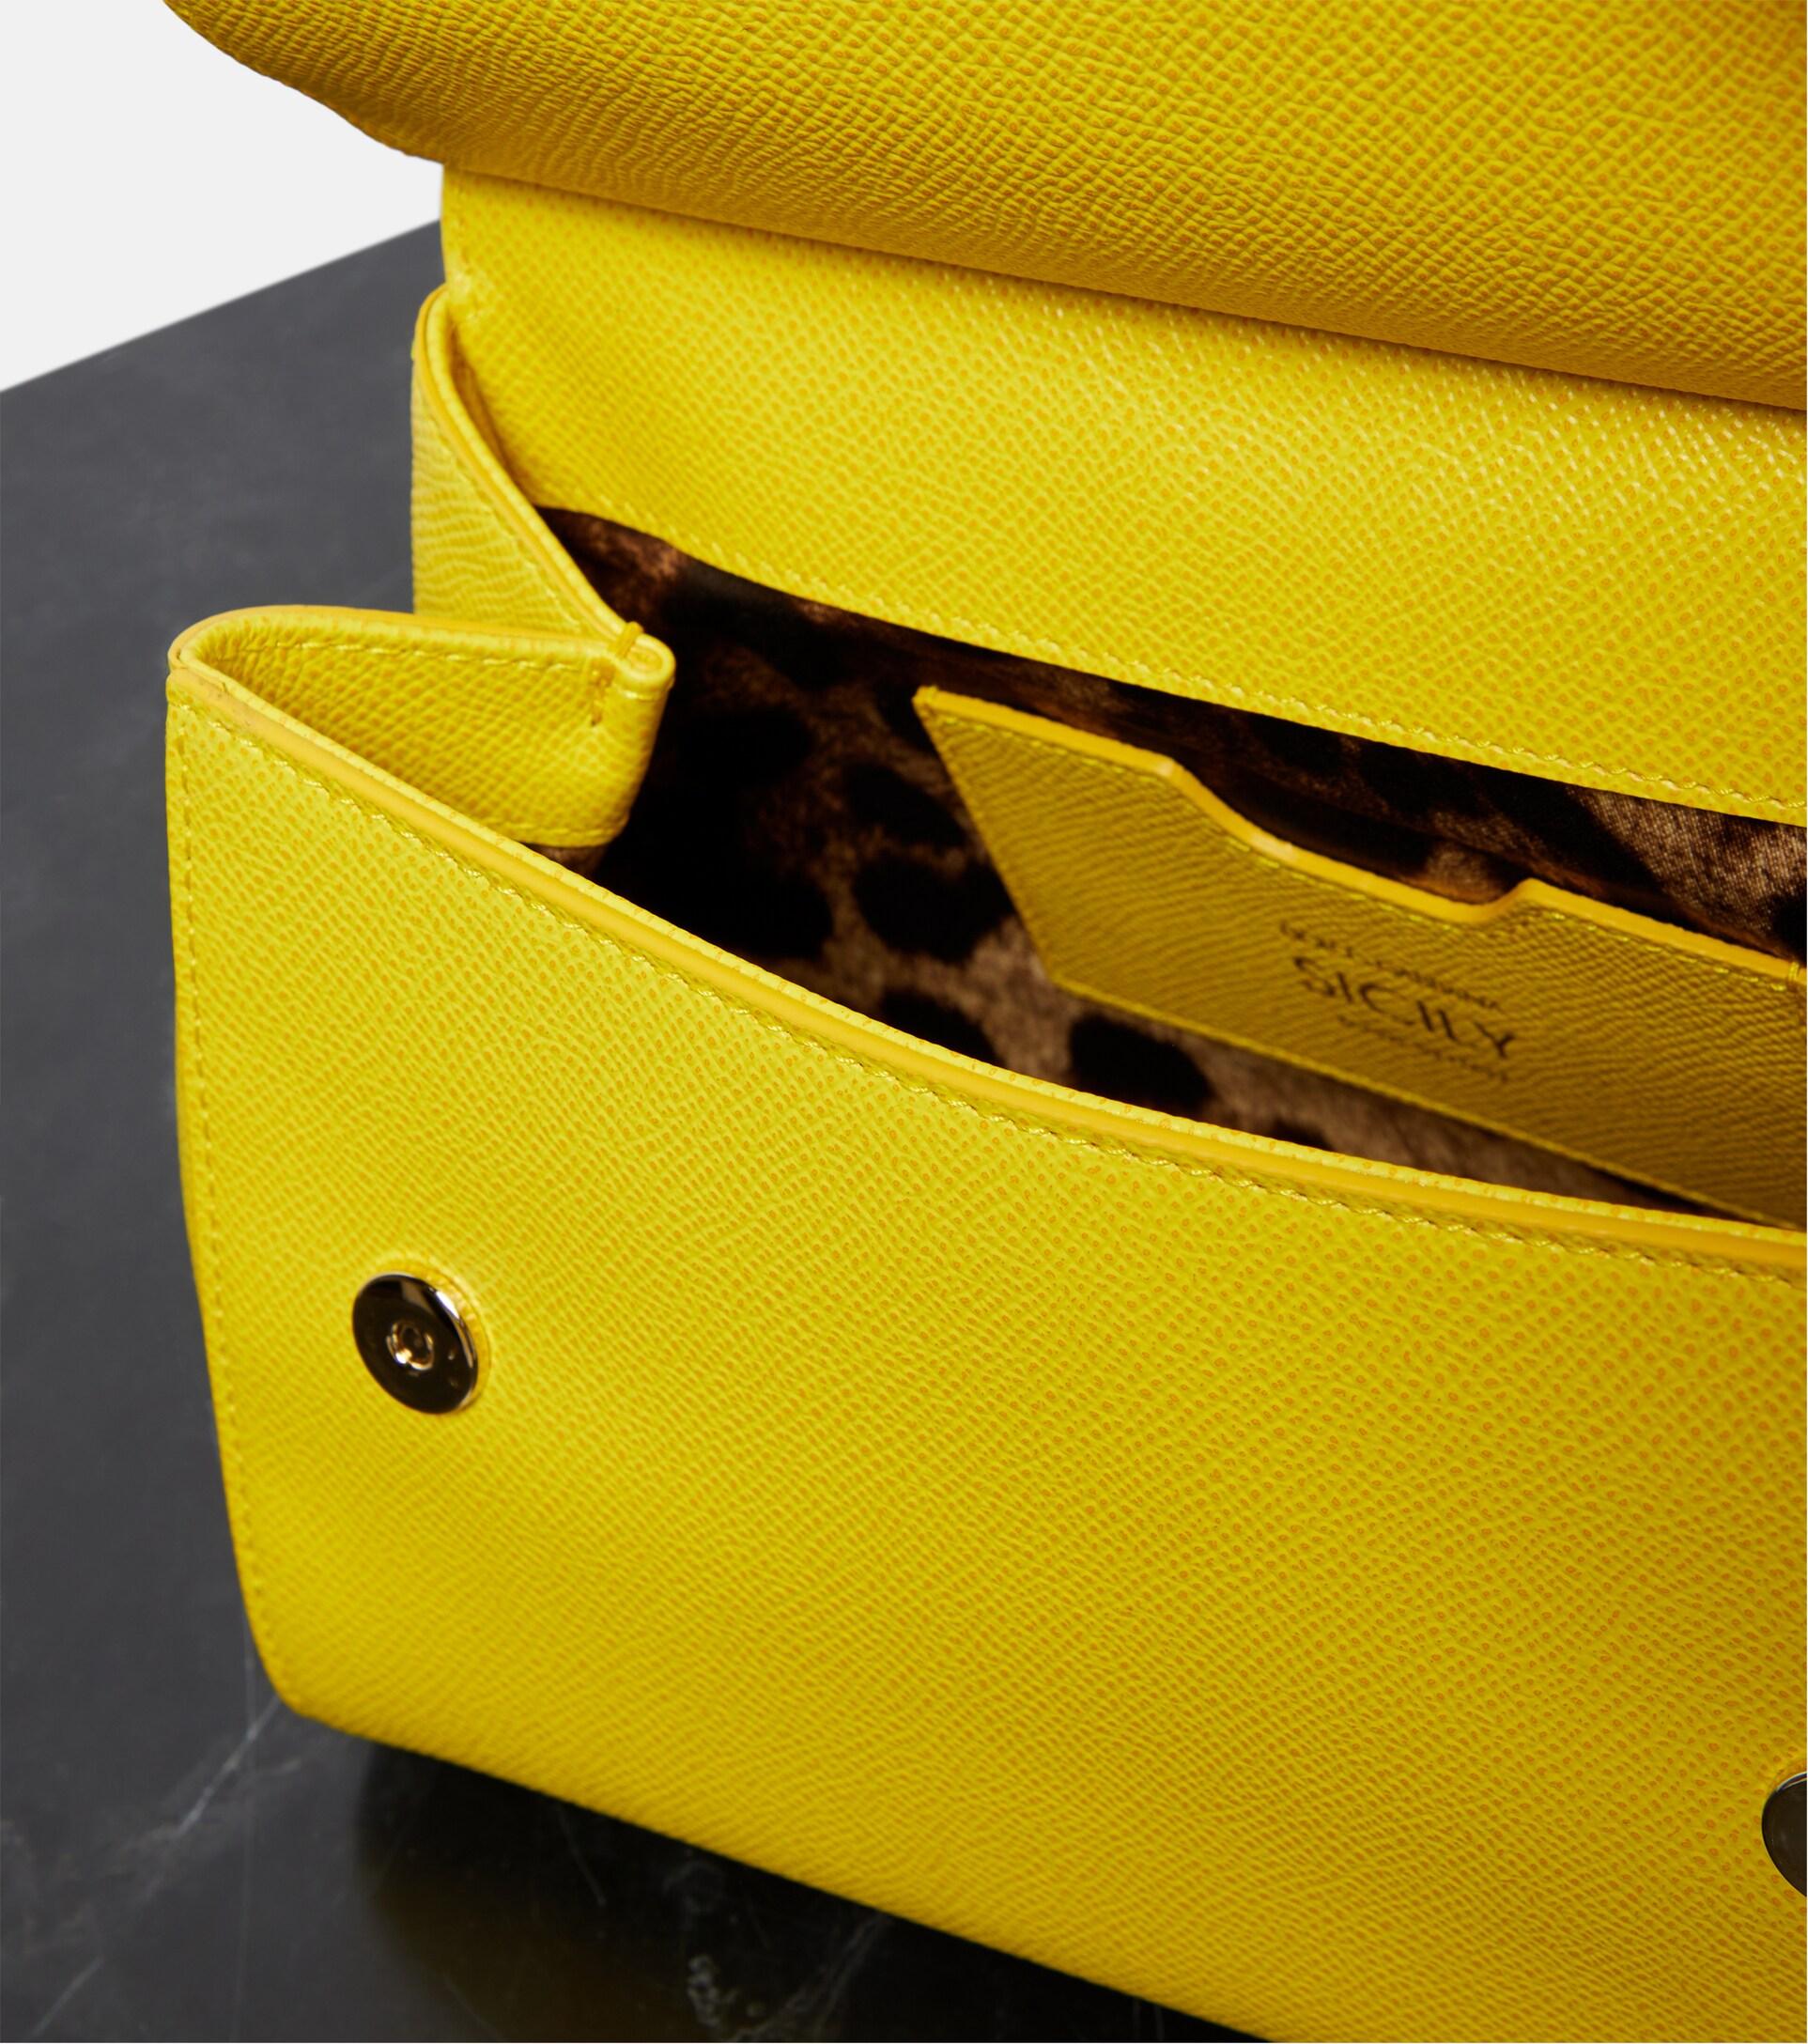 Totes bags Dolce & Gabbana - Sicily small bag - BB6003A100187399